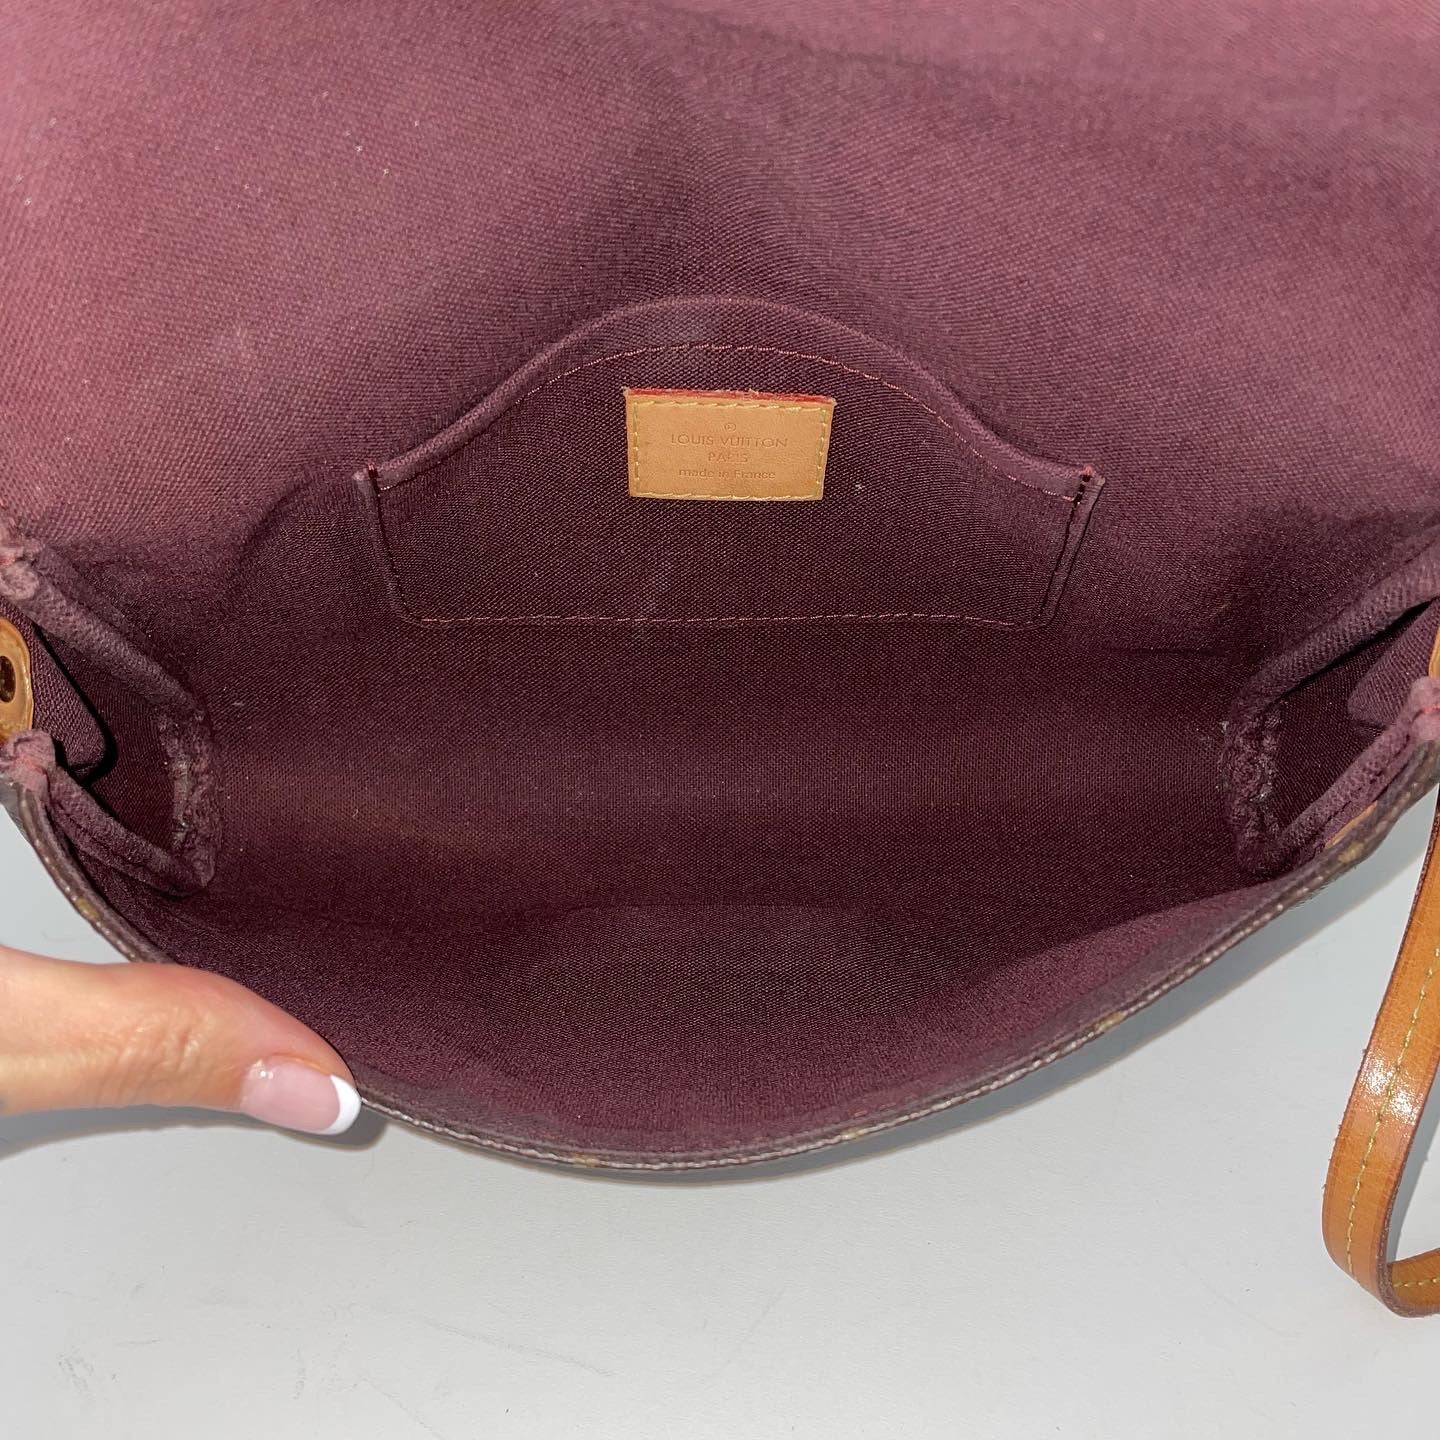 Louis Vuitton Monogram Favorite MM Crossbody Flap Bag